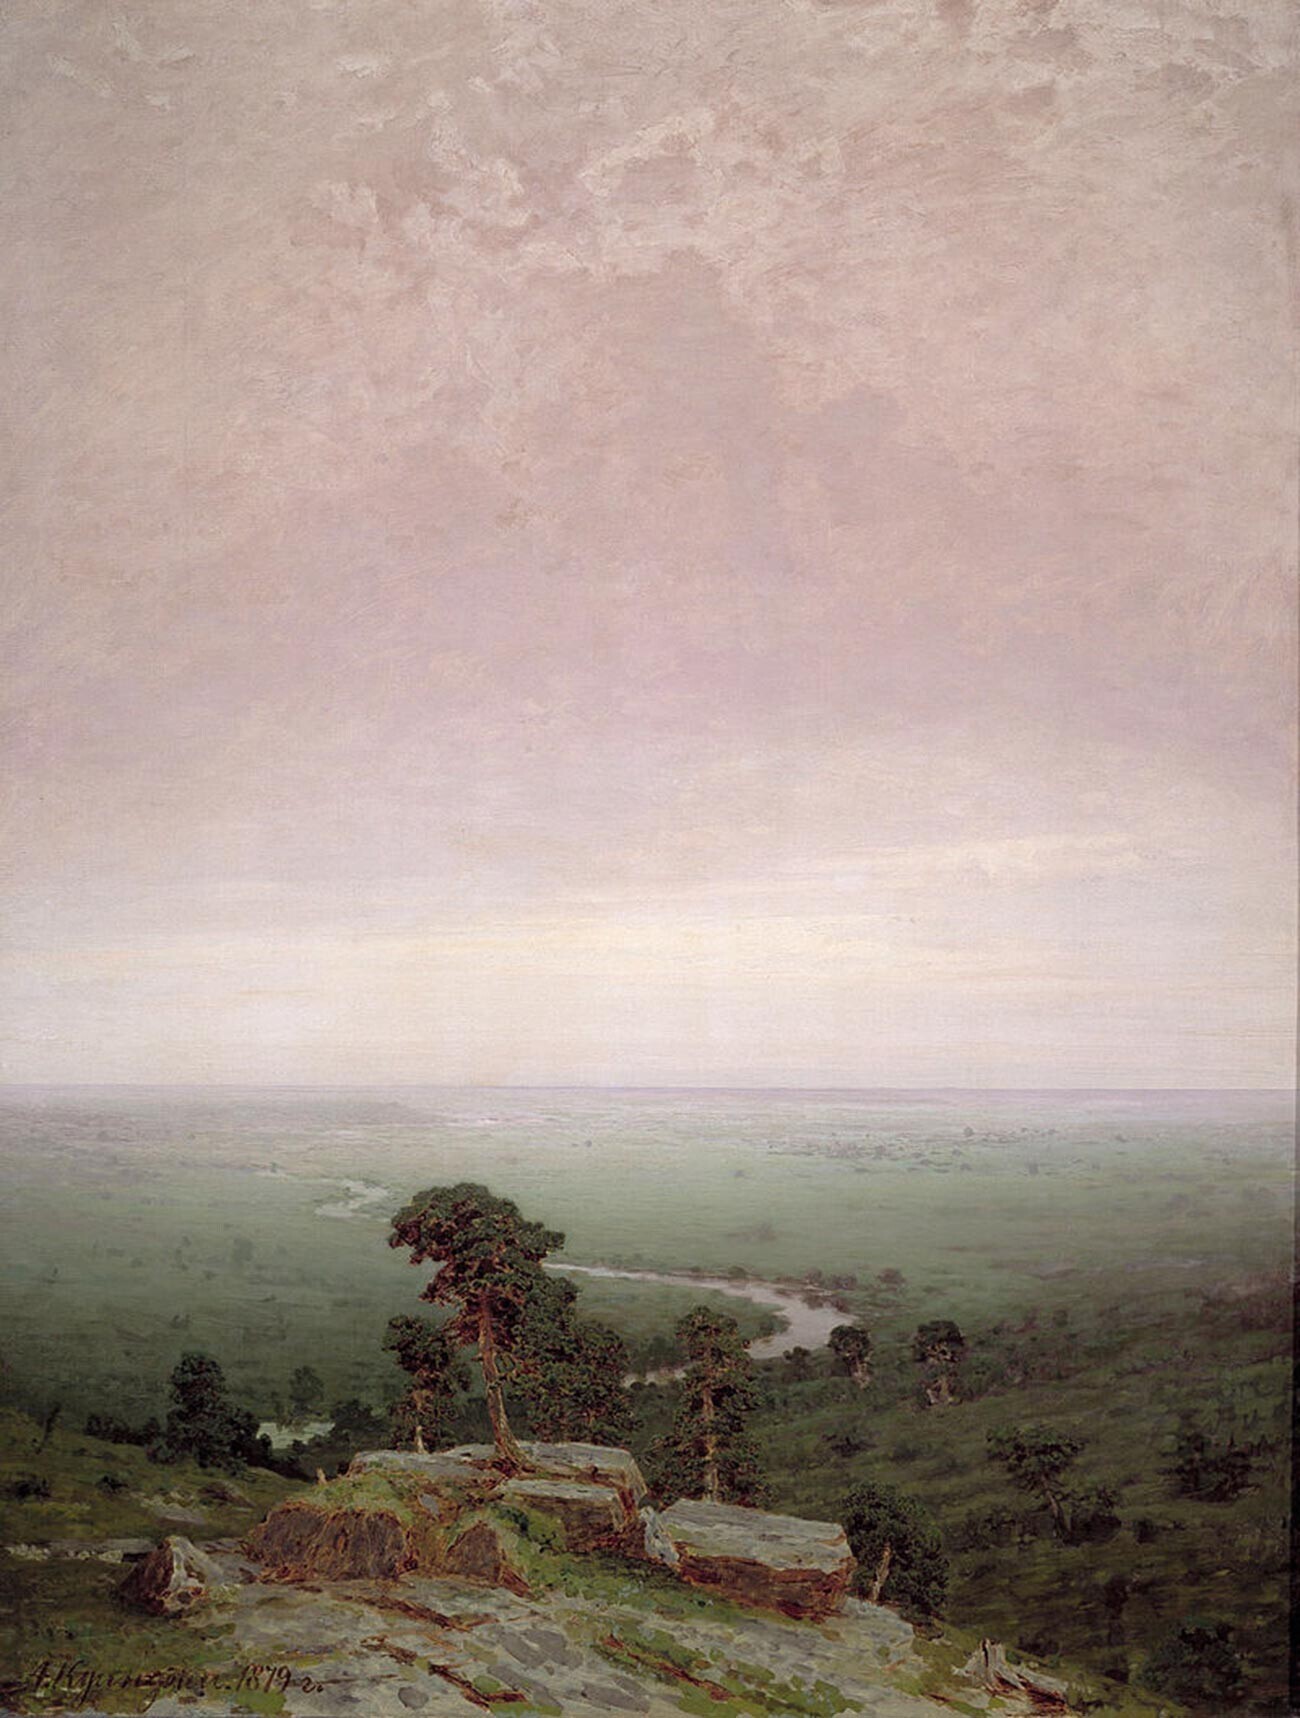 Utara (1879).